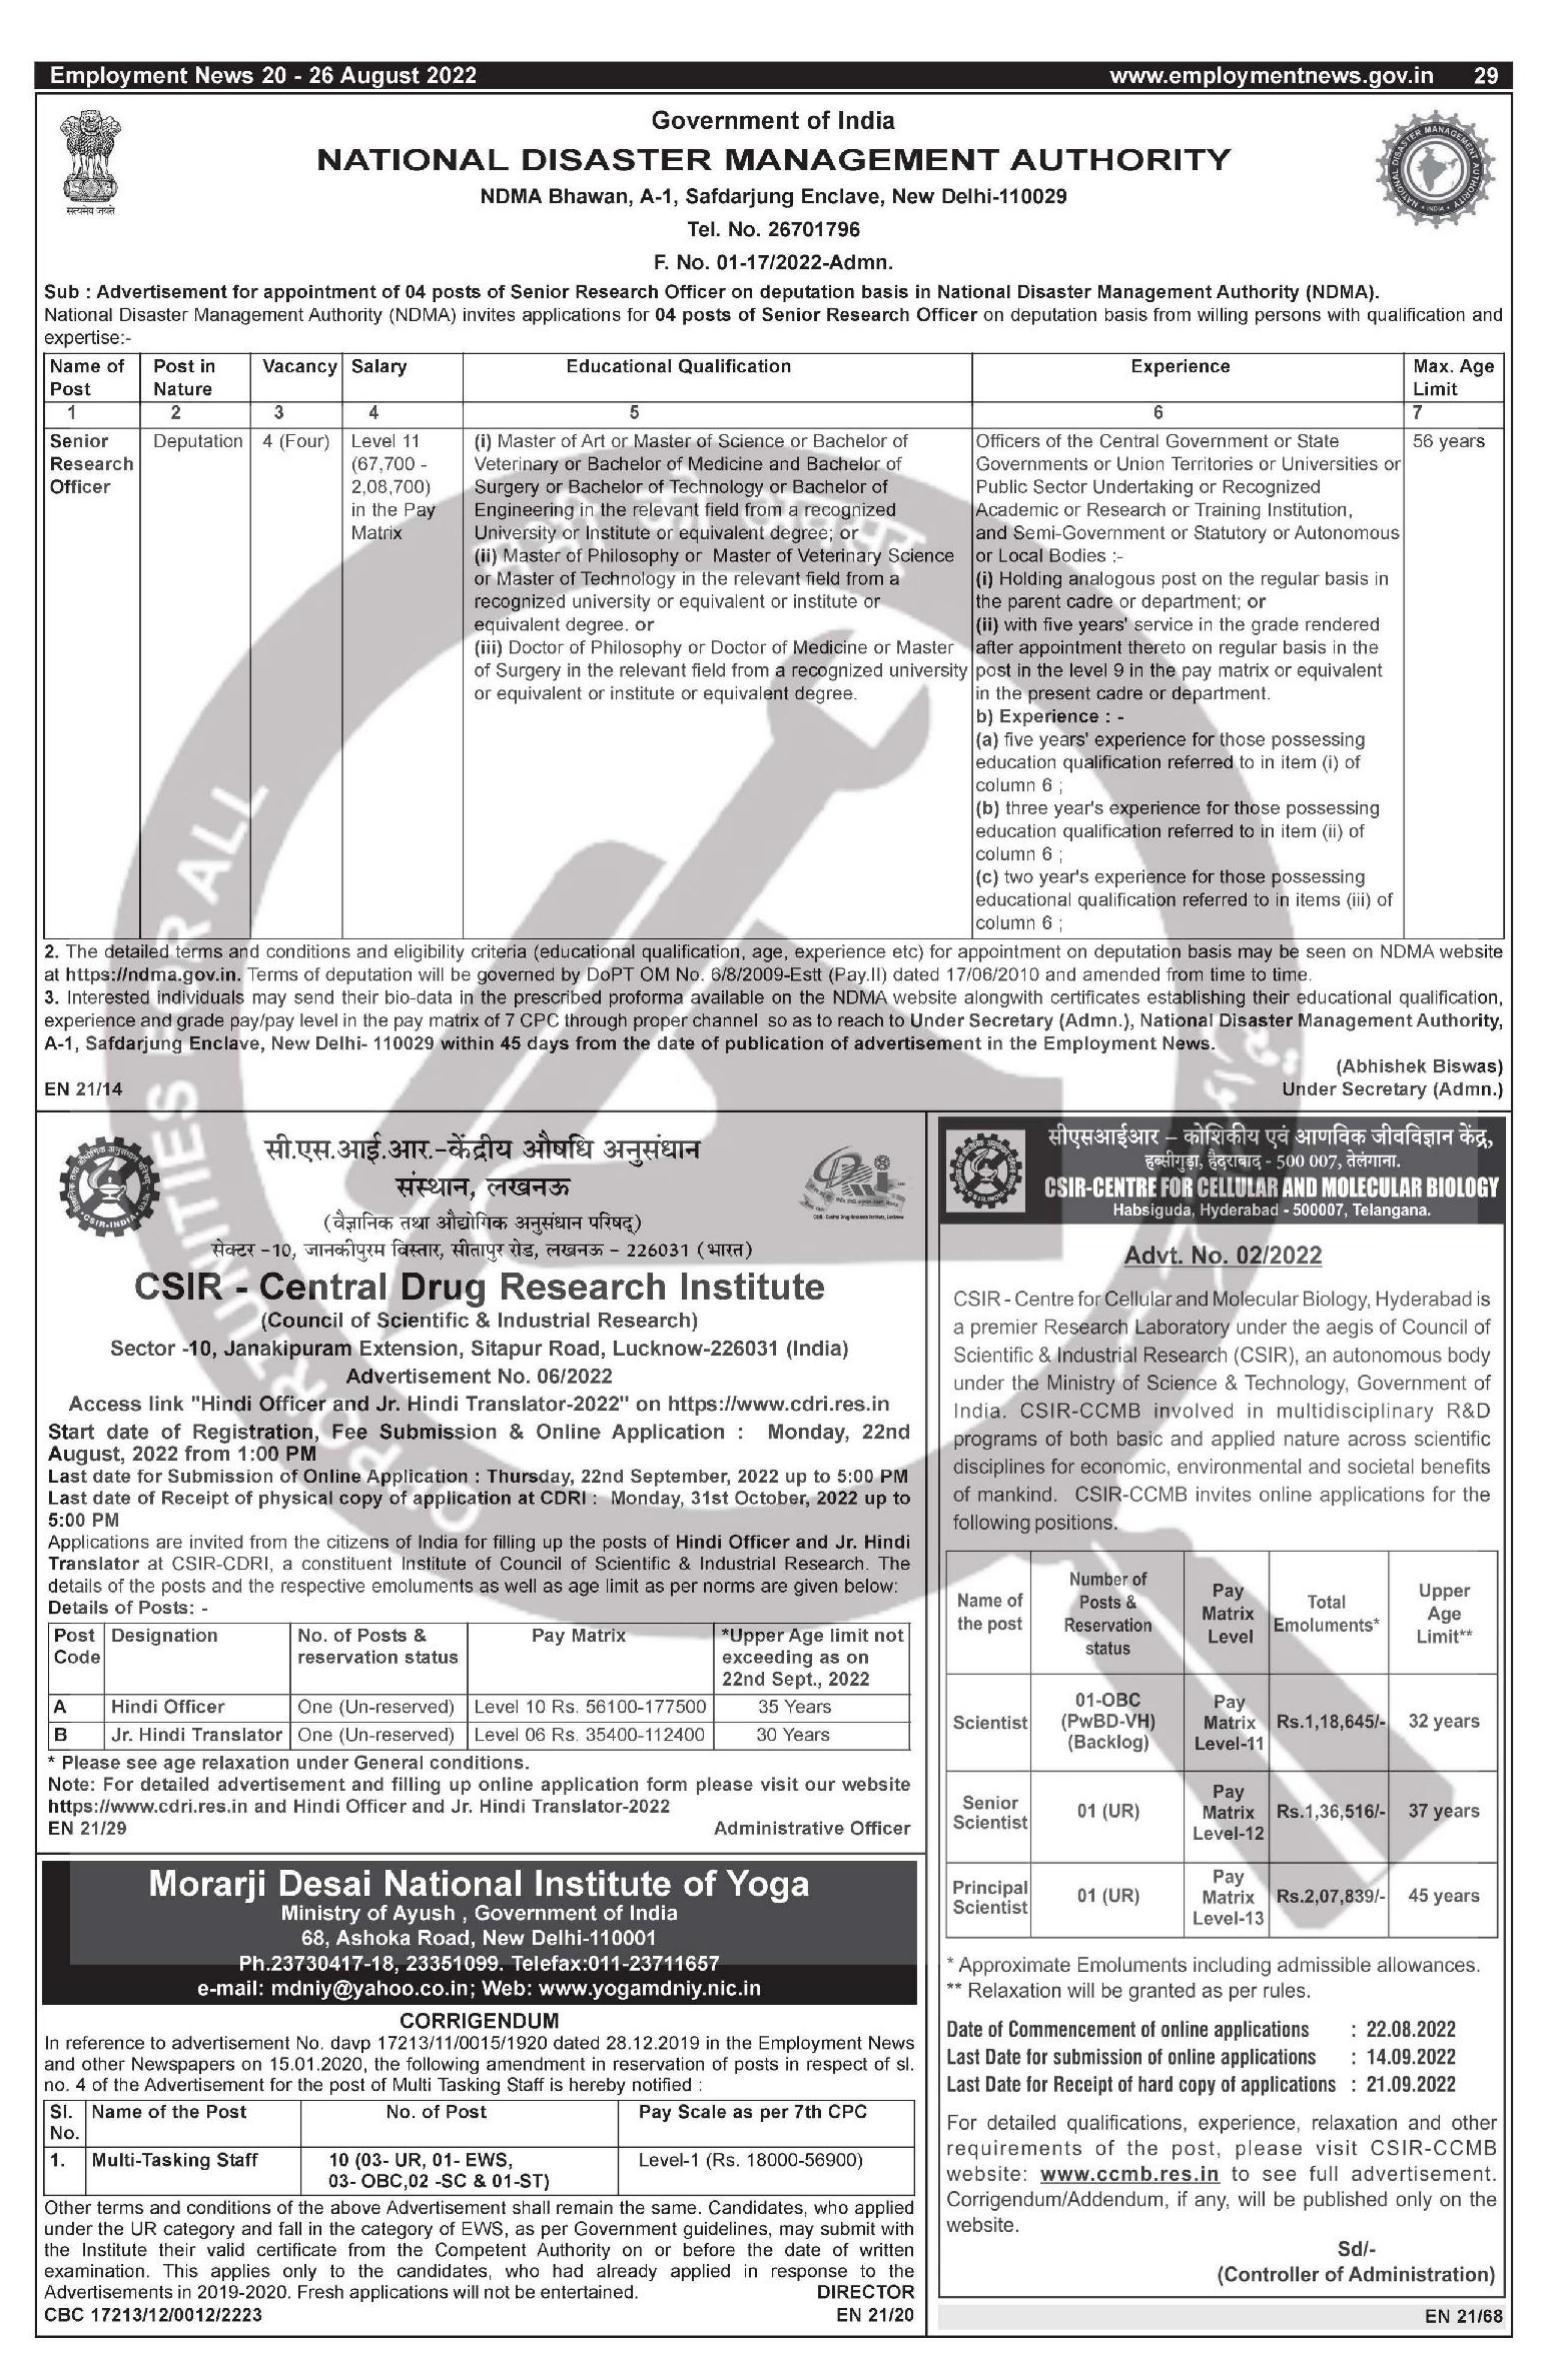 CDRI Hindi Officer, Junior Hindi Translator Recruitment 2022 - Page 1